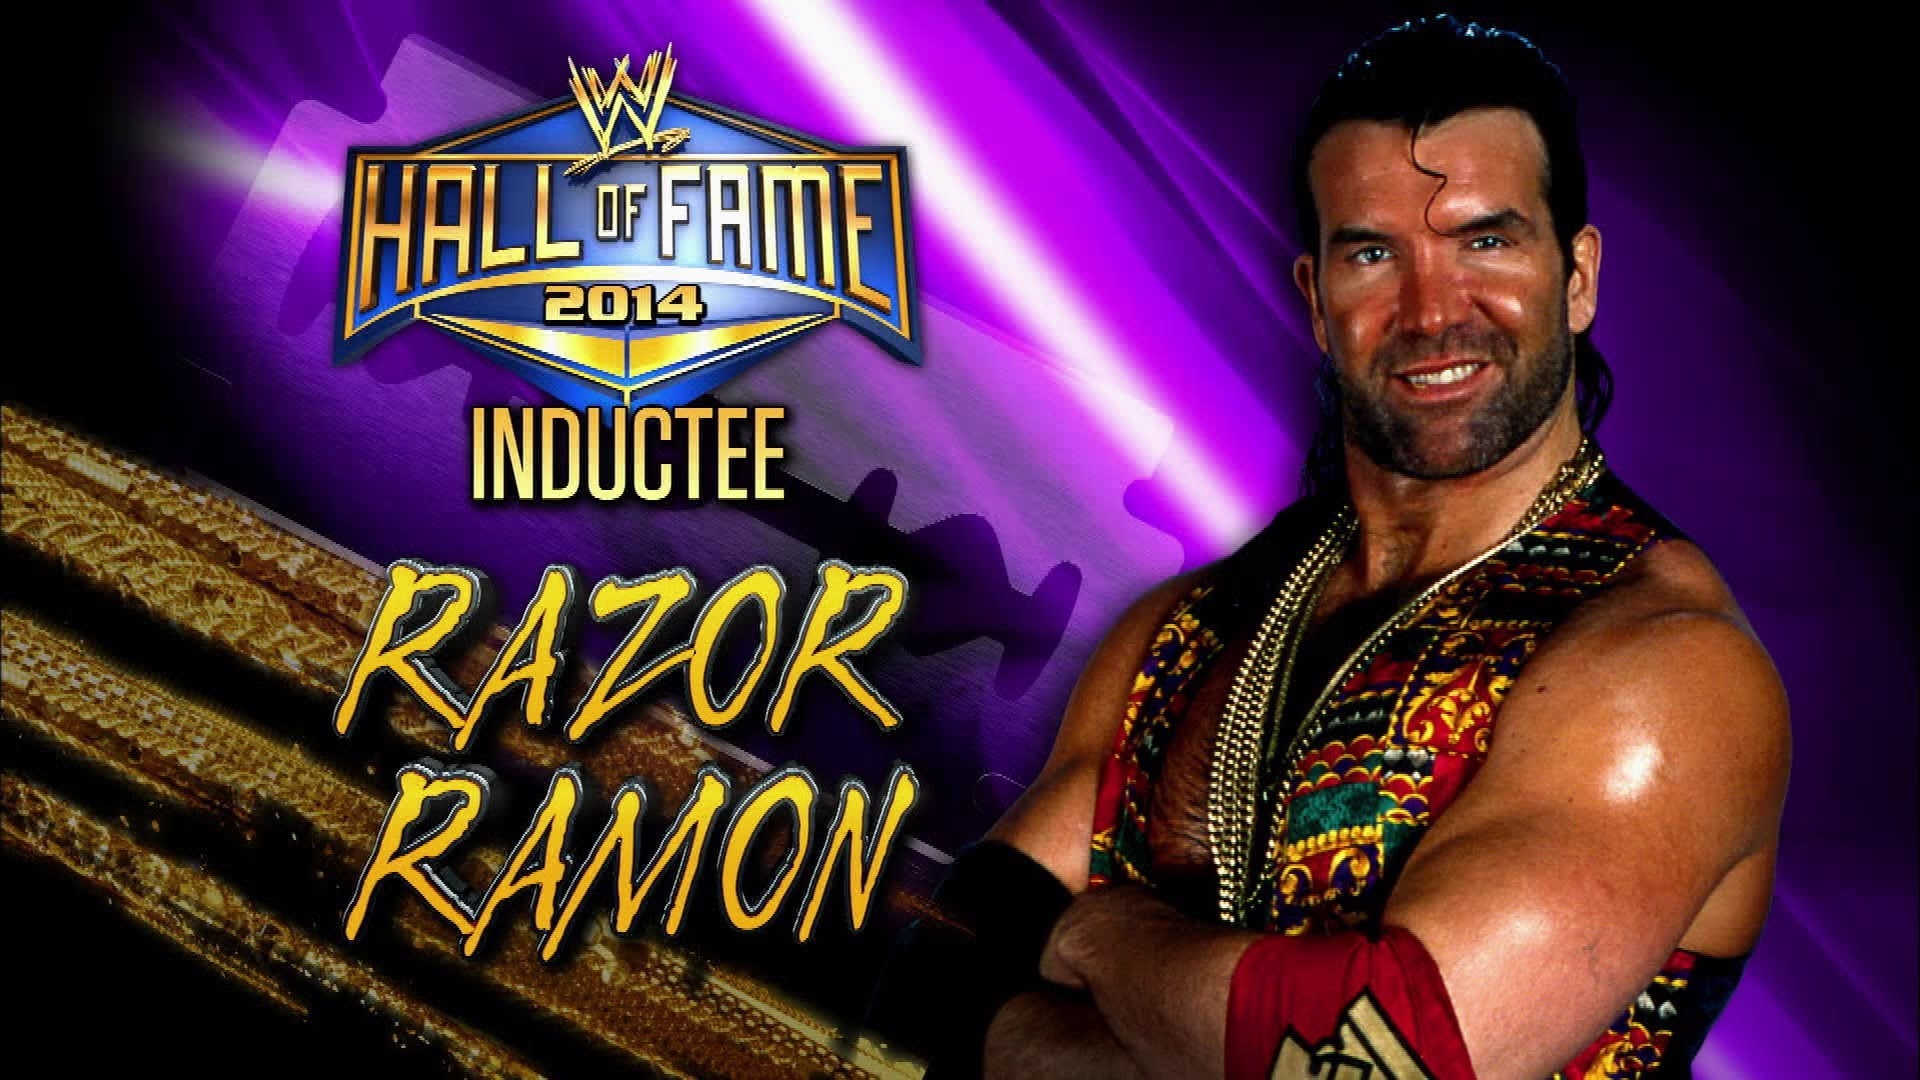 Razor Ramon Free Wwe Wallpaper Wrestler Razor Ramon